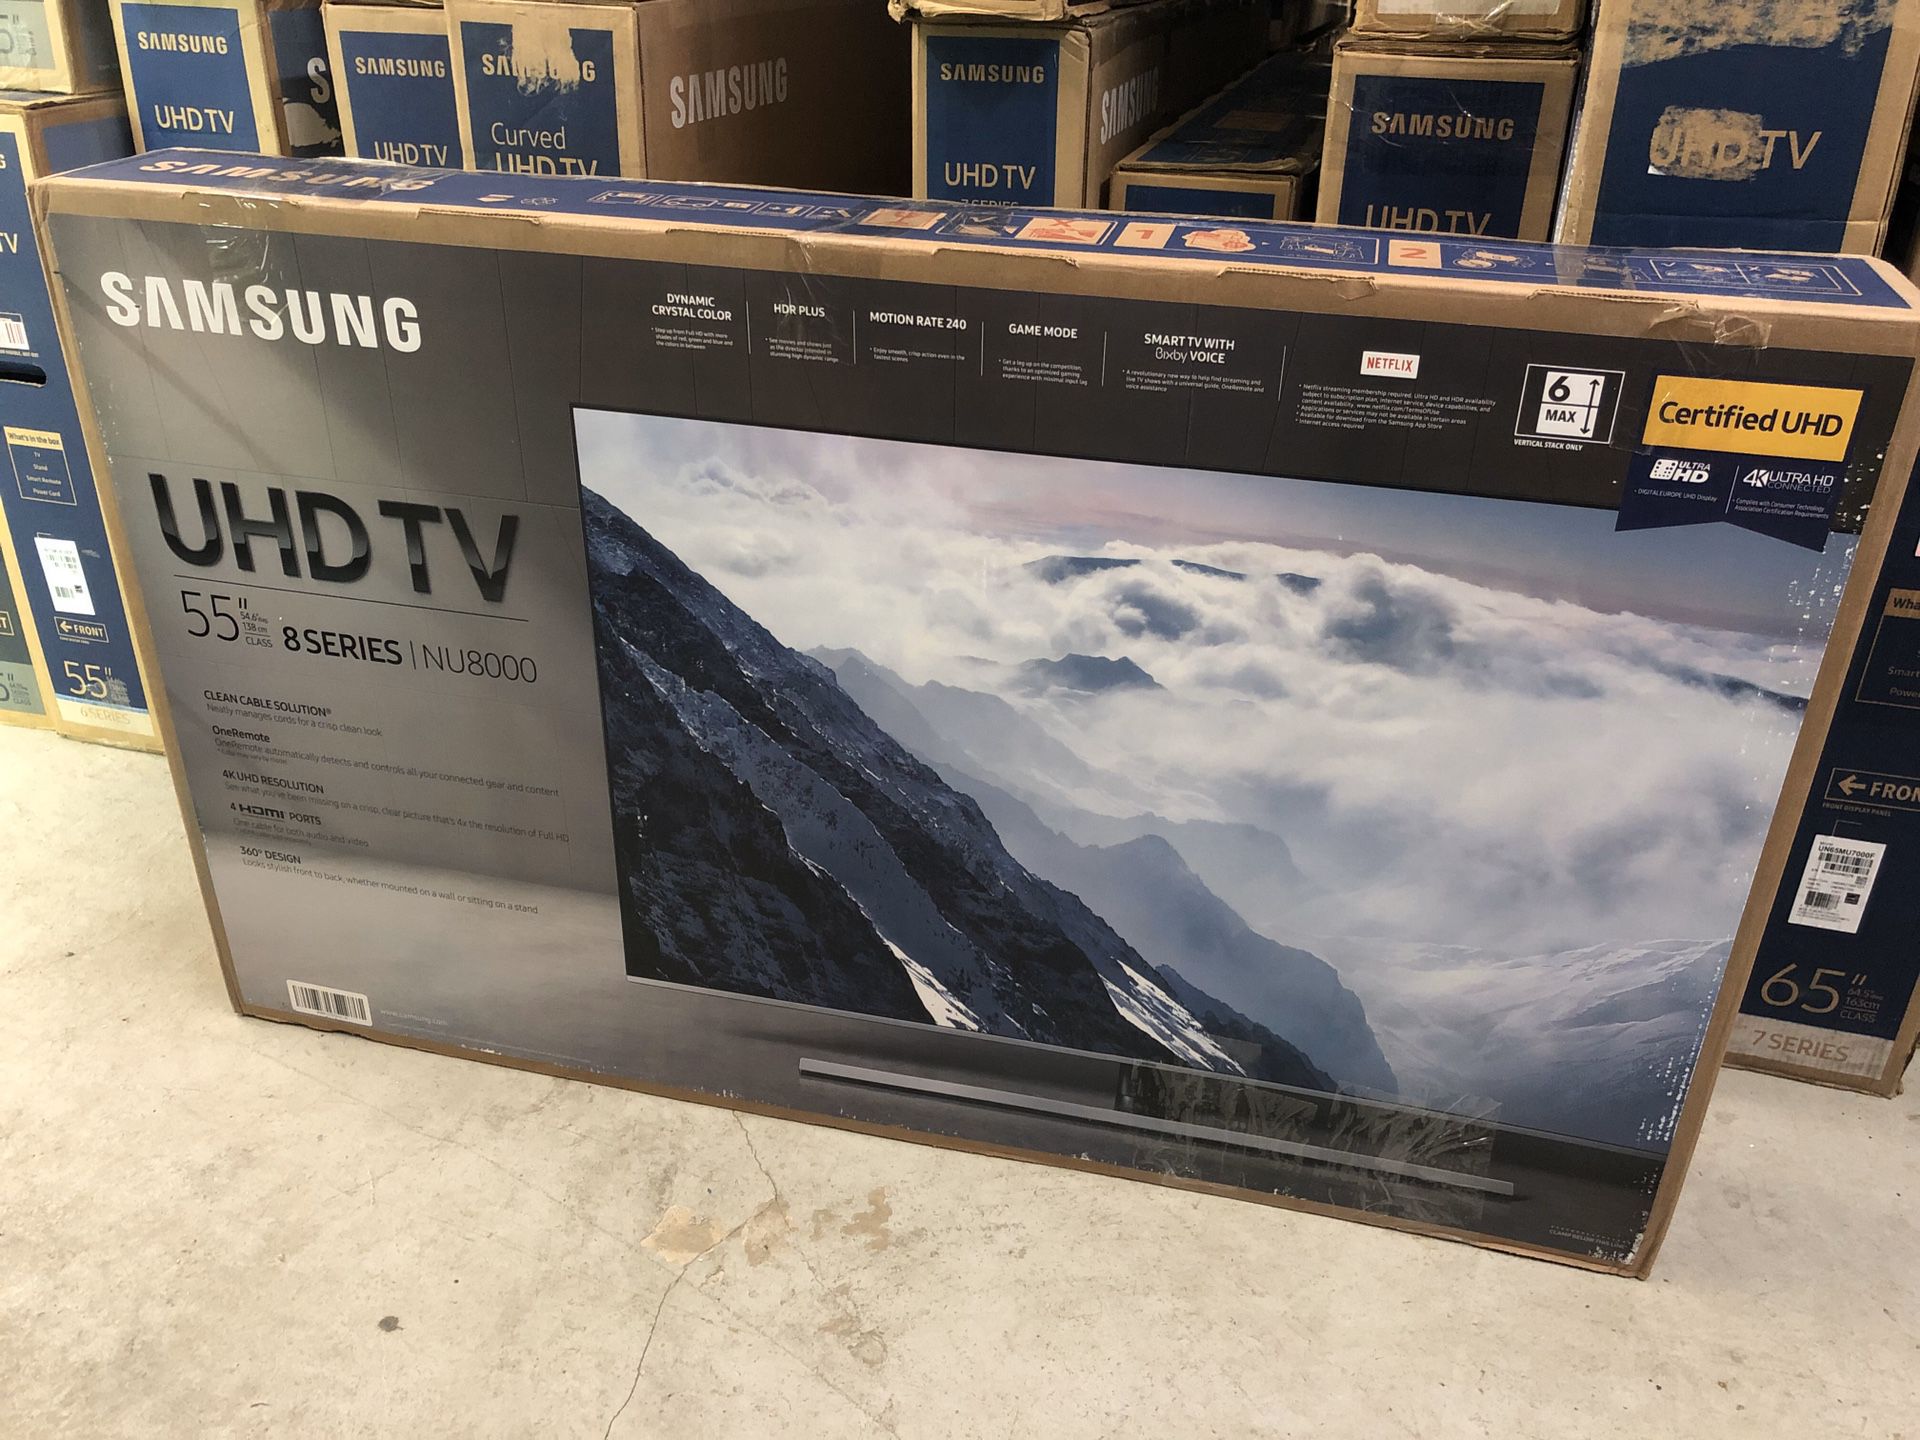 Samsung UN55NU8000 55-inch 4K UHD Smart TV 8 Series